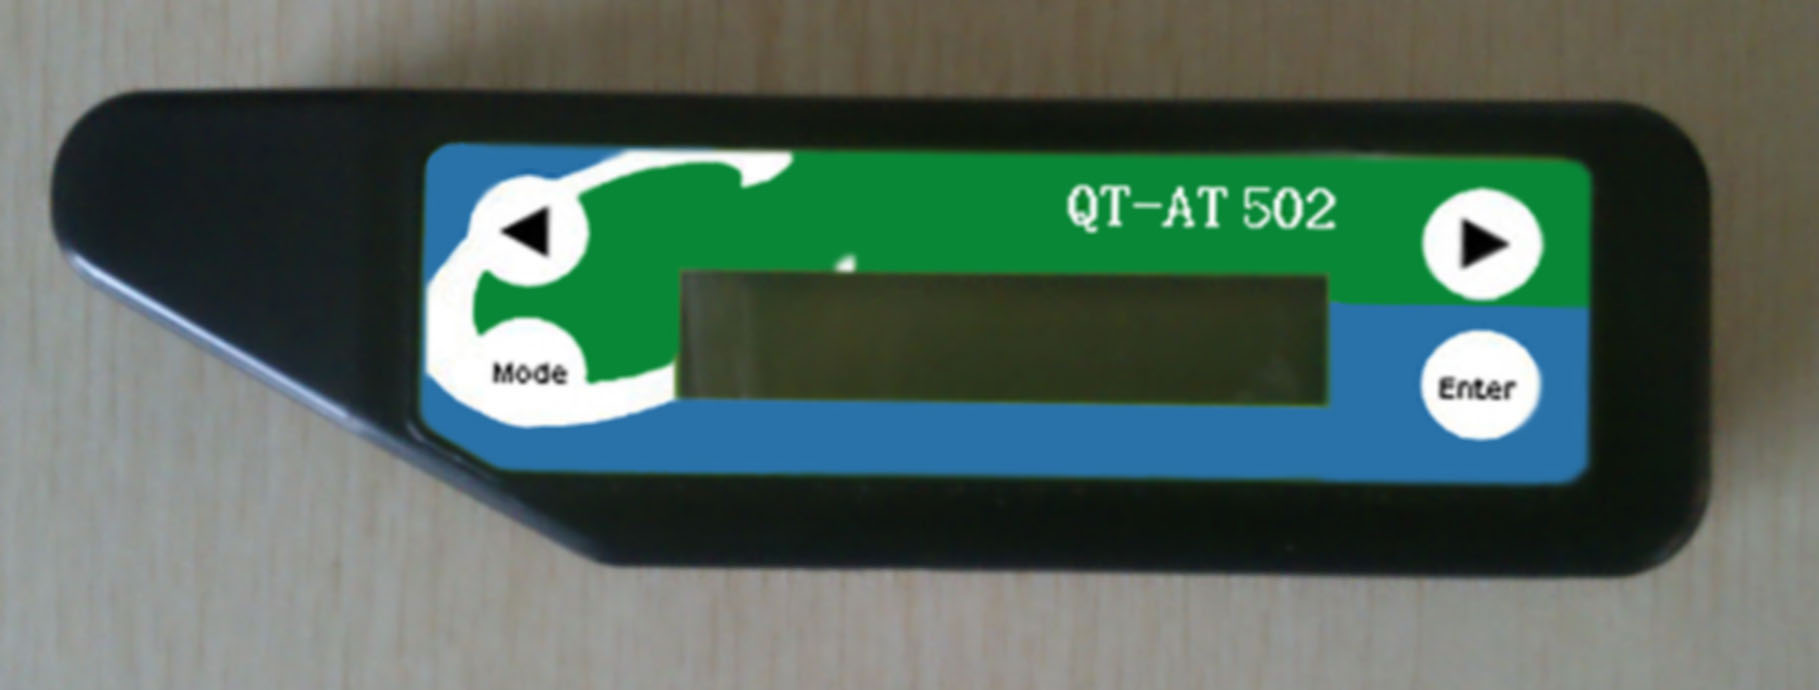 QT-AT 502 Portable Chlorophyll Meter